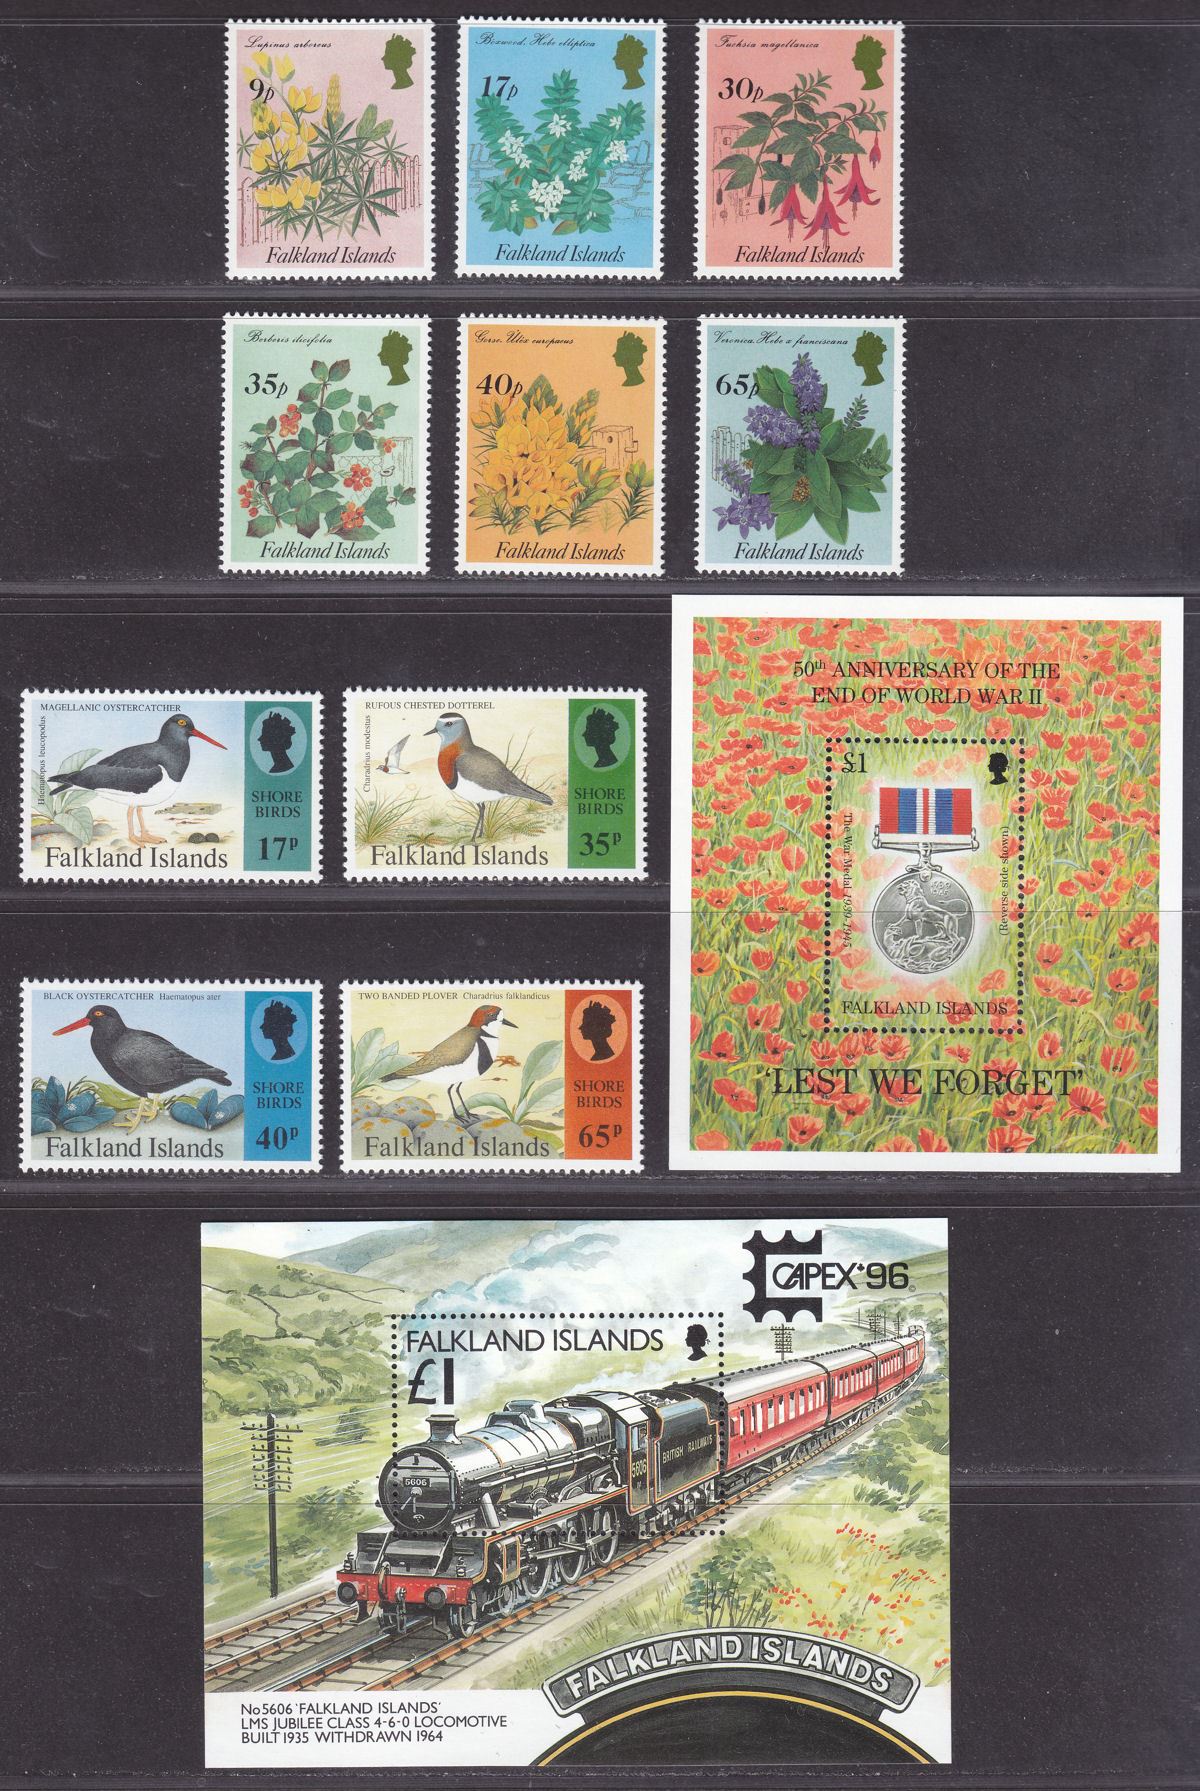 Falkland Islands 1995-96 QEII Selection Mint inc Shrubs, Shore Birds